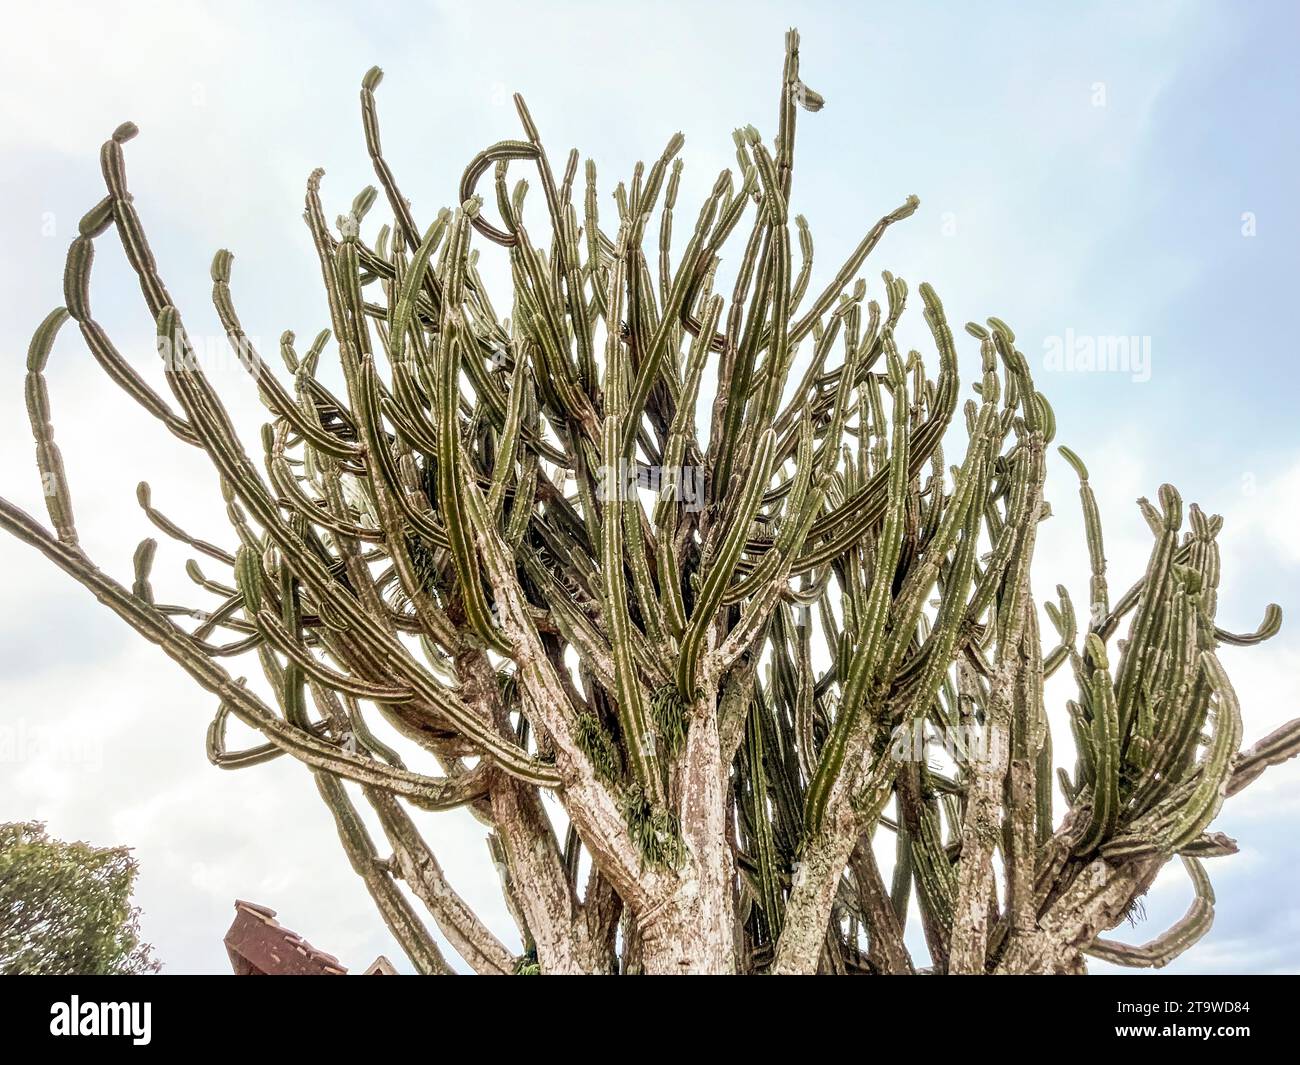 Madagascar, Fianarantsoa, Cactus tree Stock Photo